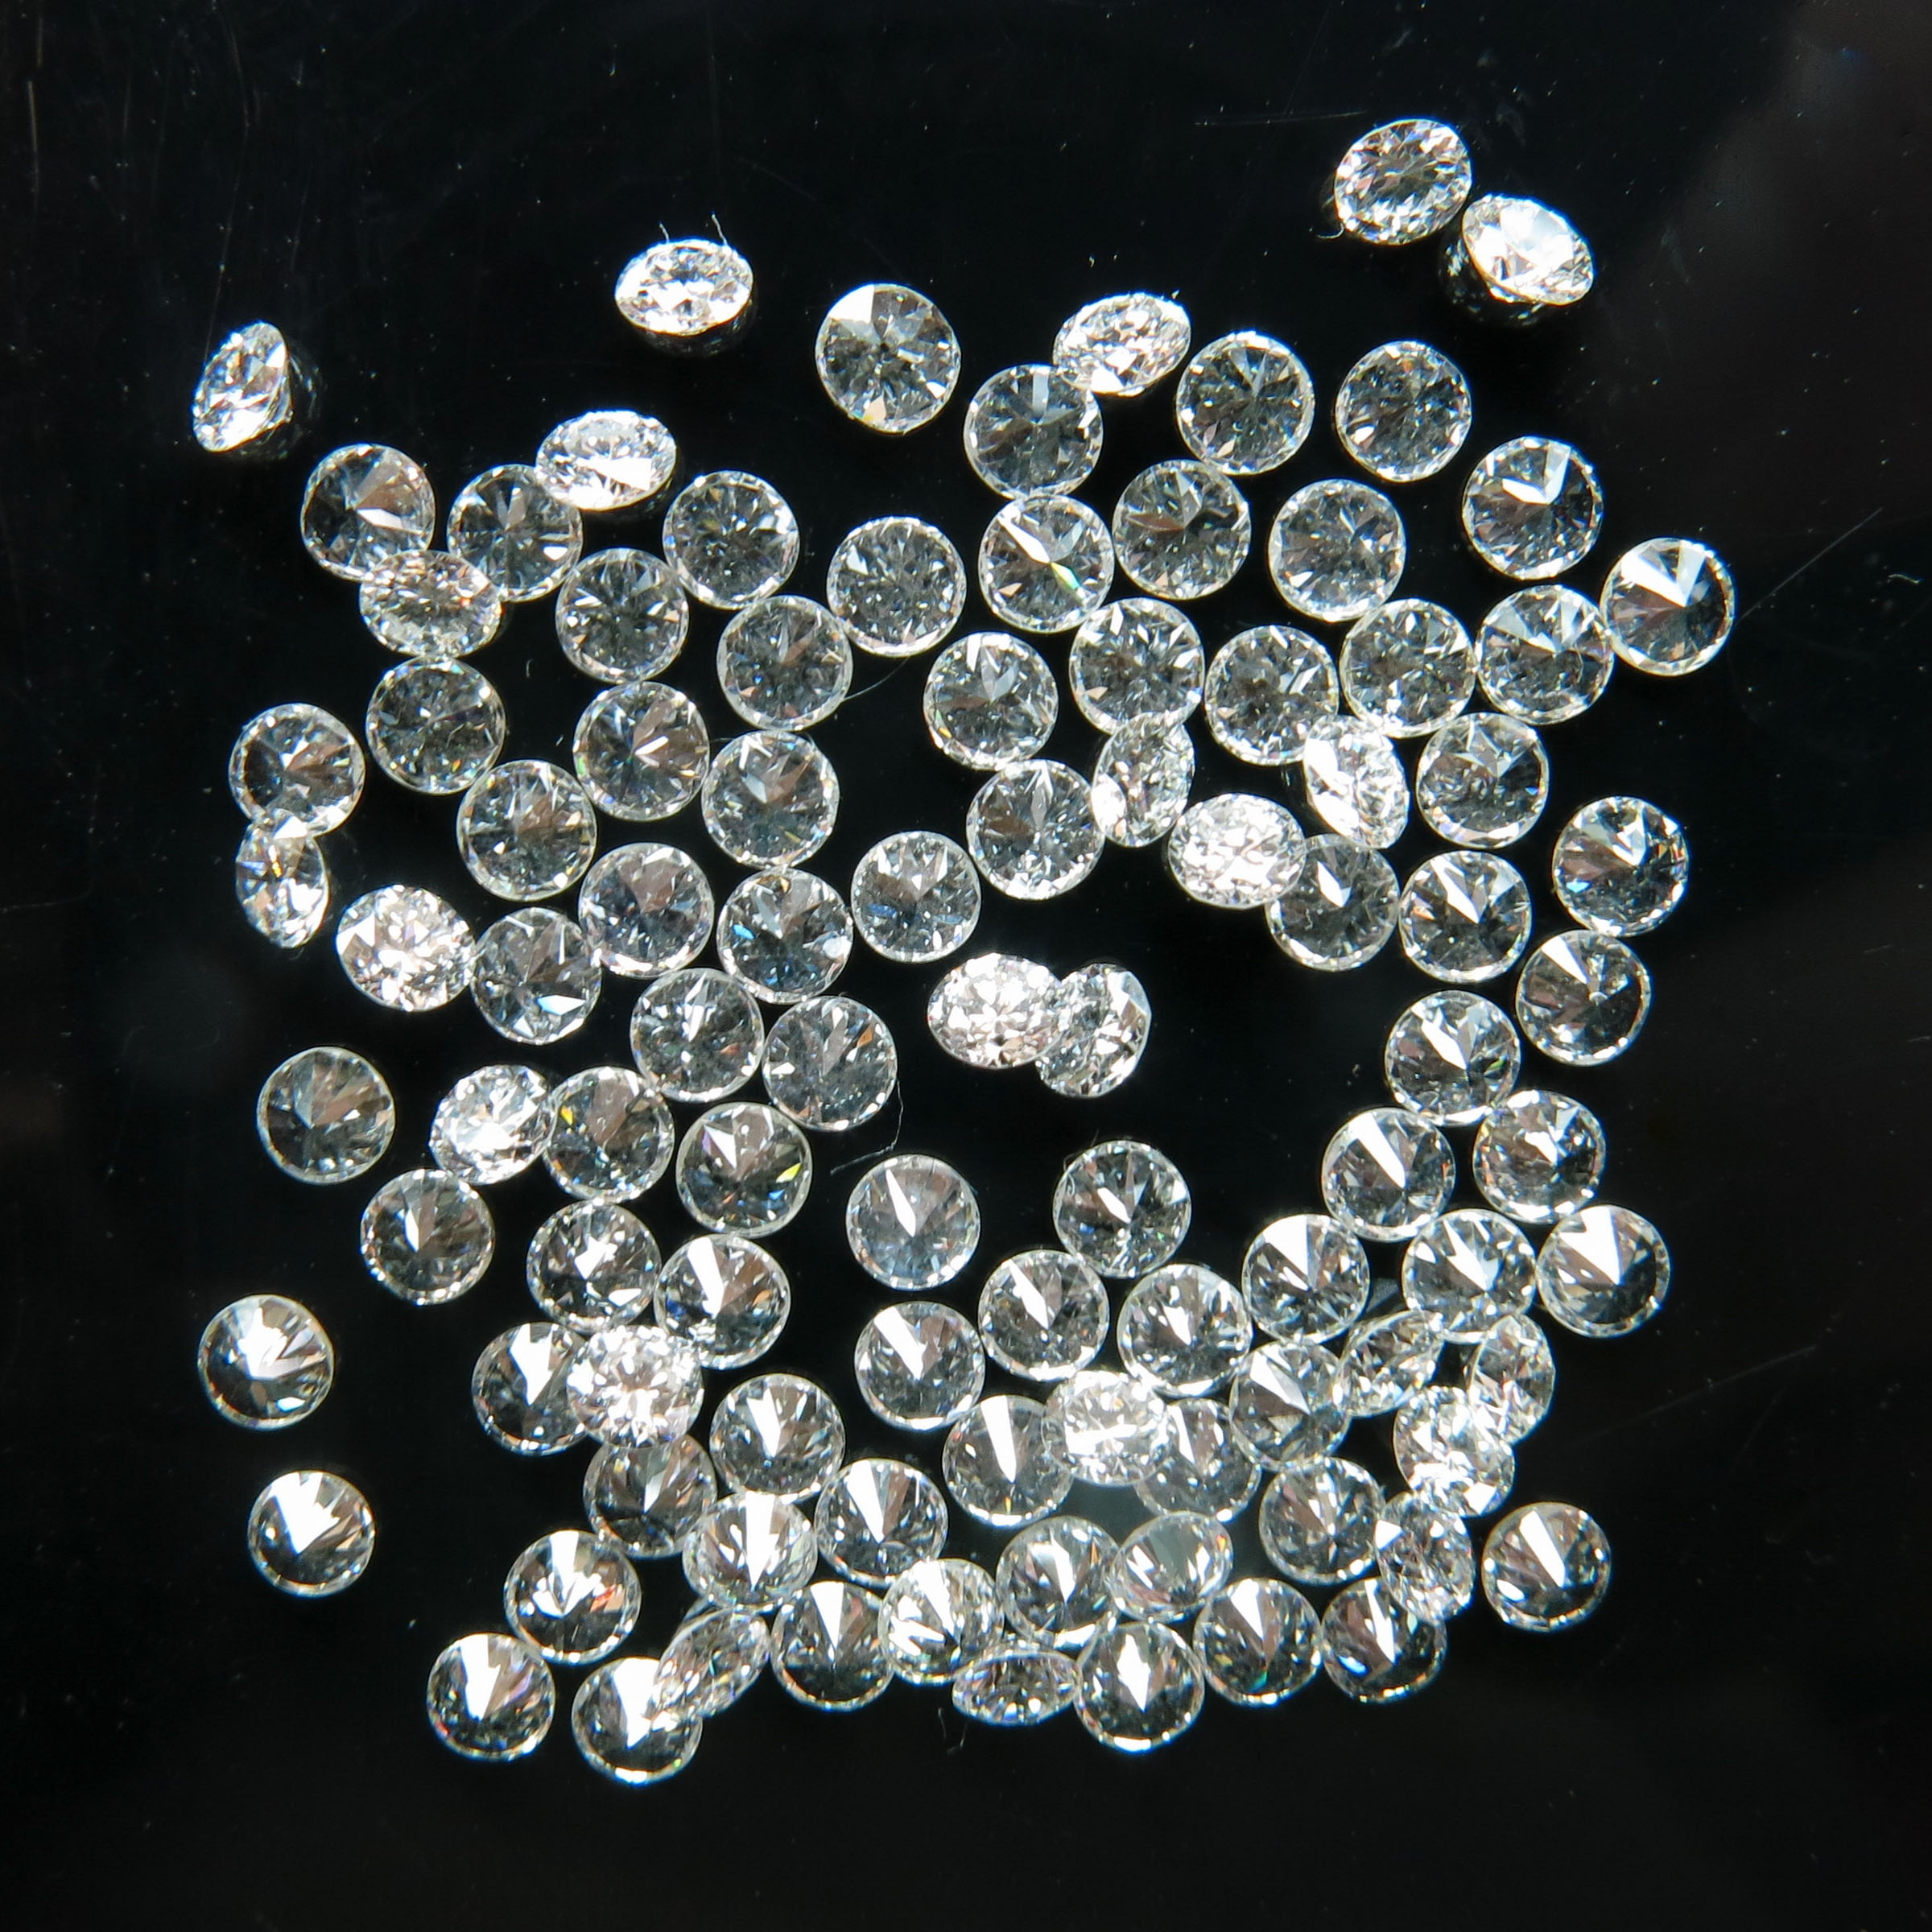 99 Brilliant Cut Diamonds